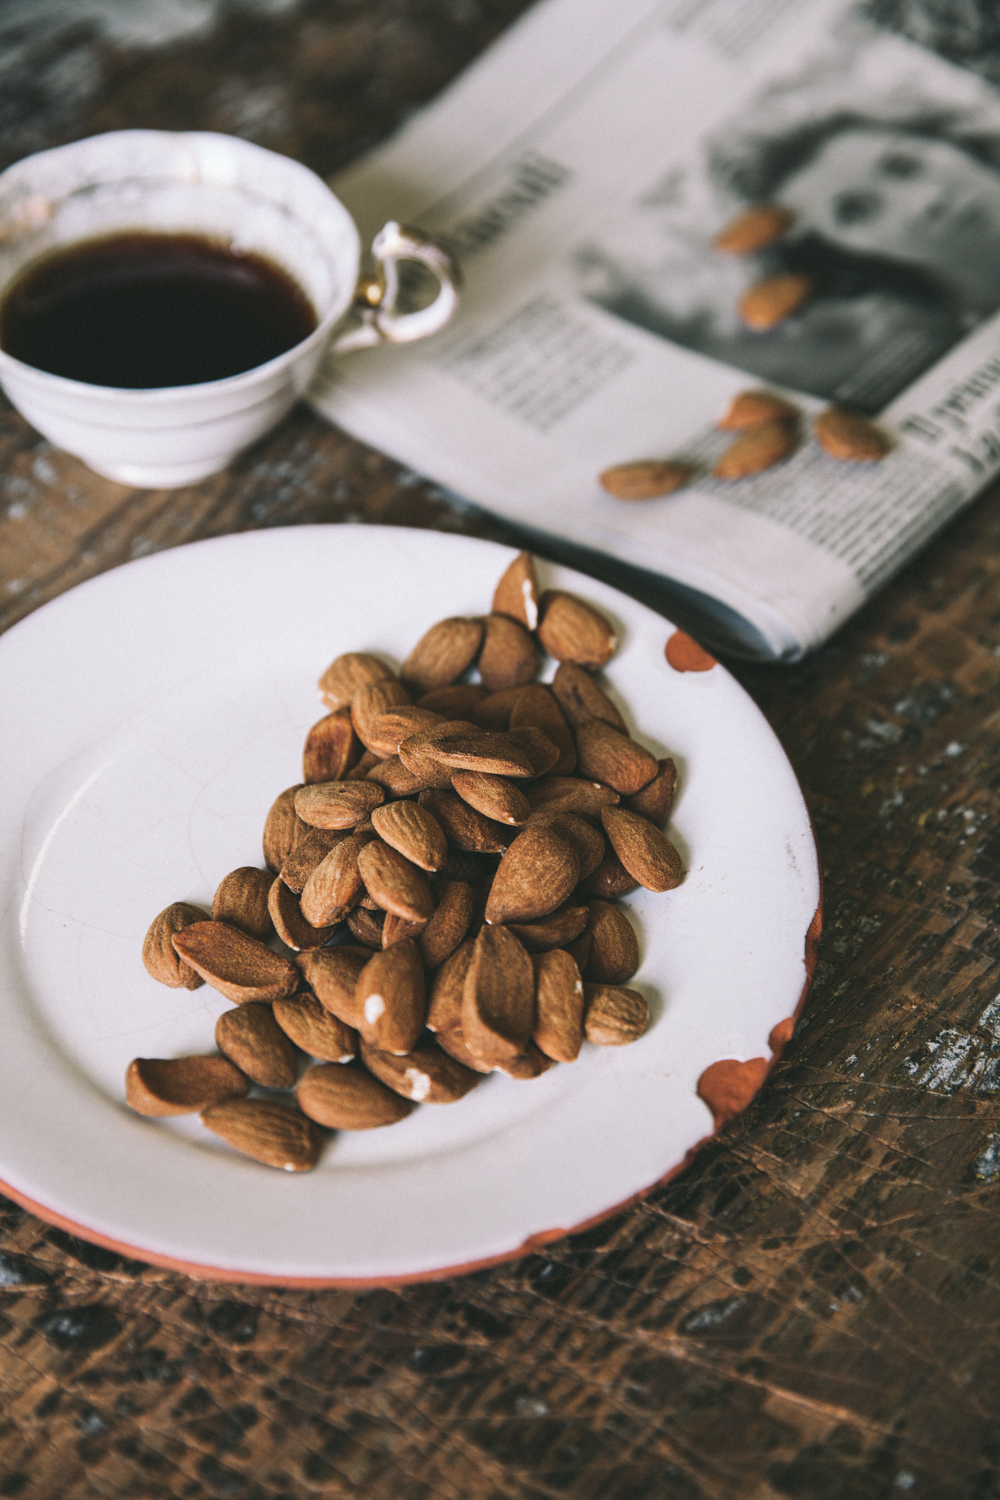 snack on almond heart health